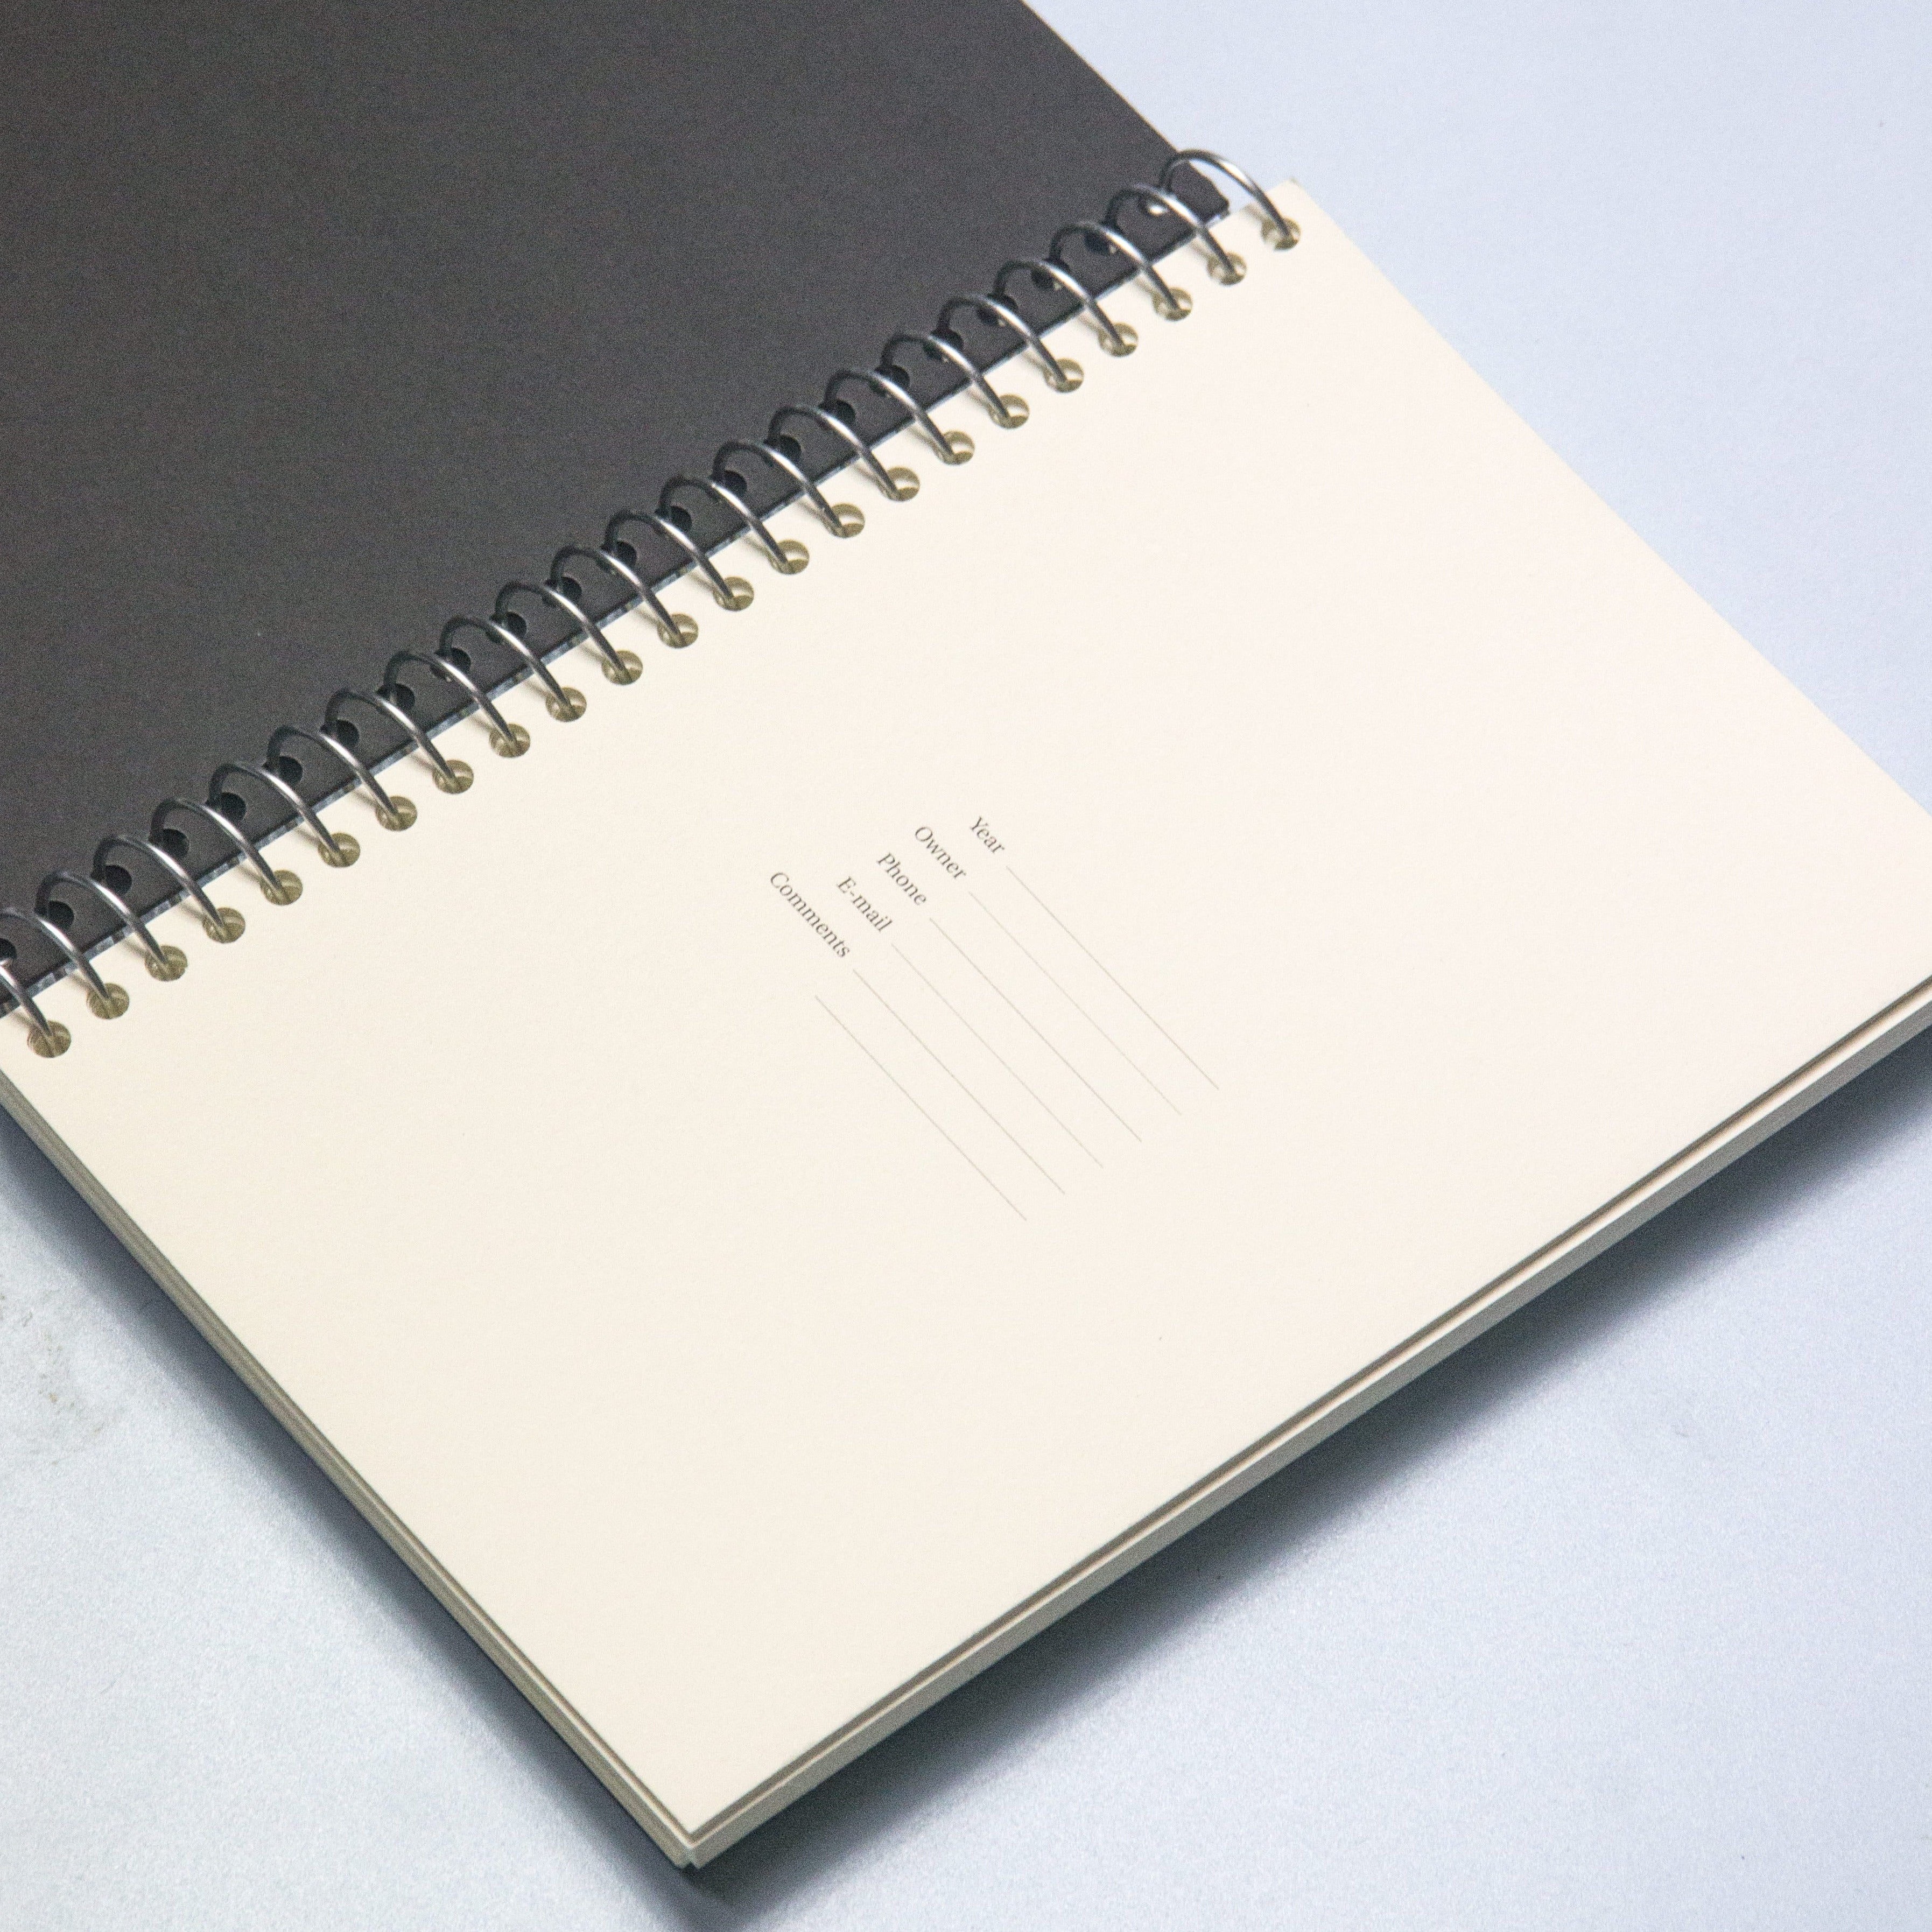 Best black cover spiral notebook. From Octàgon Design